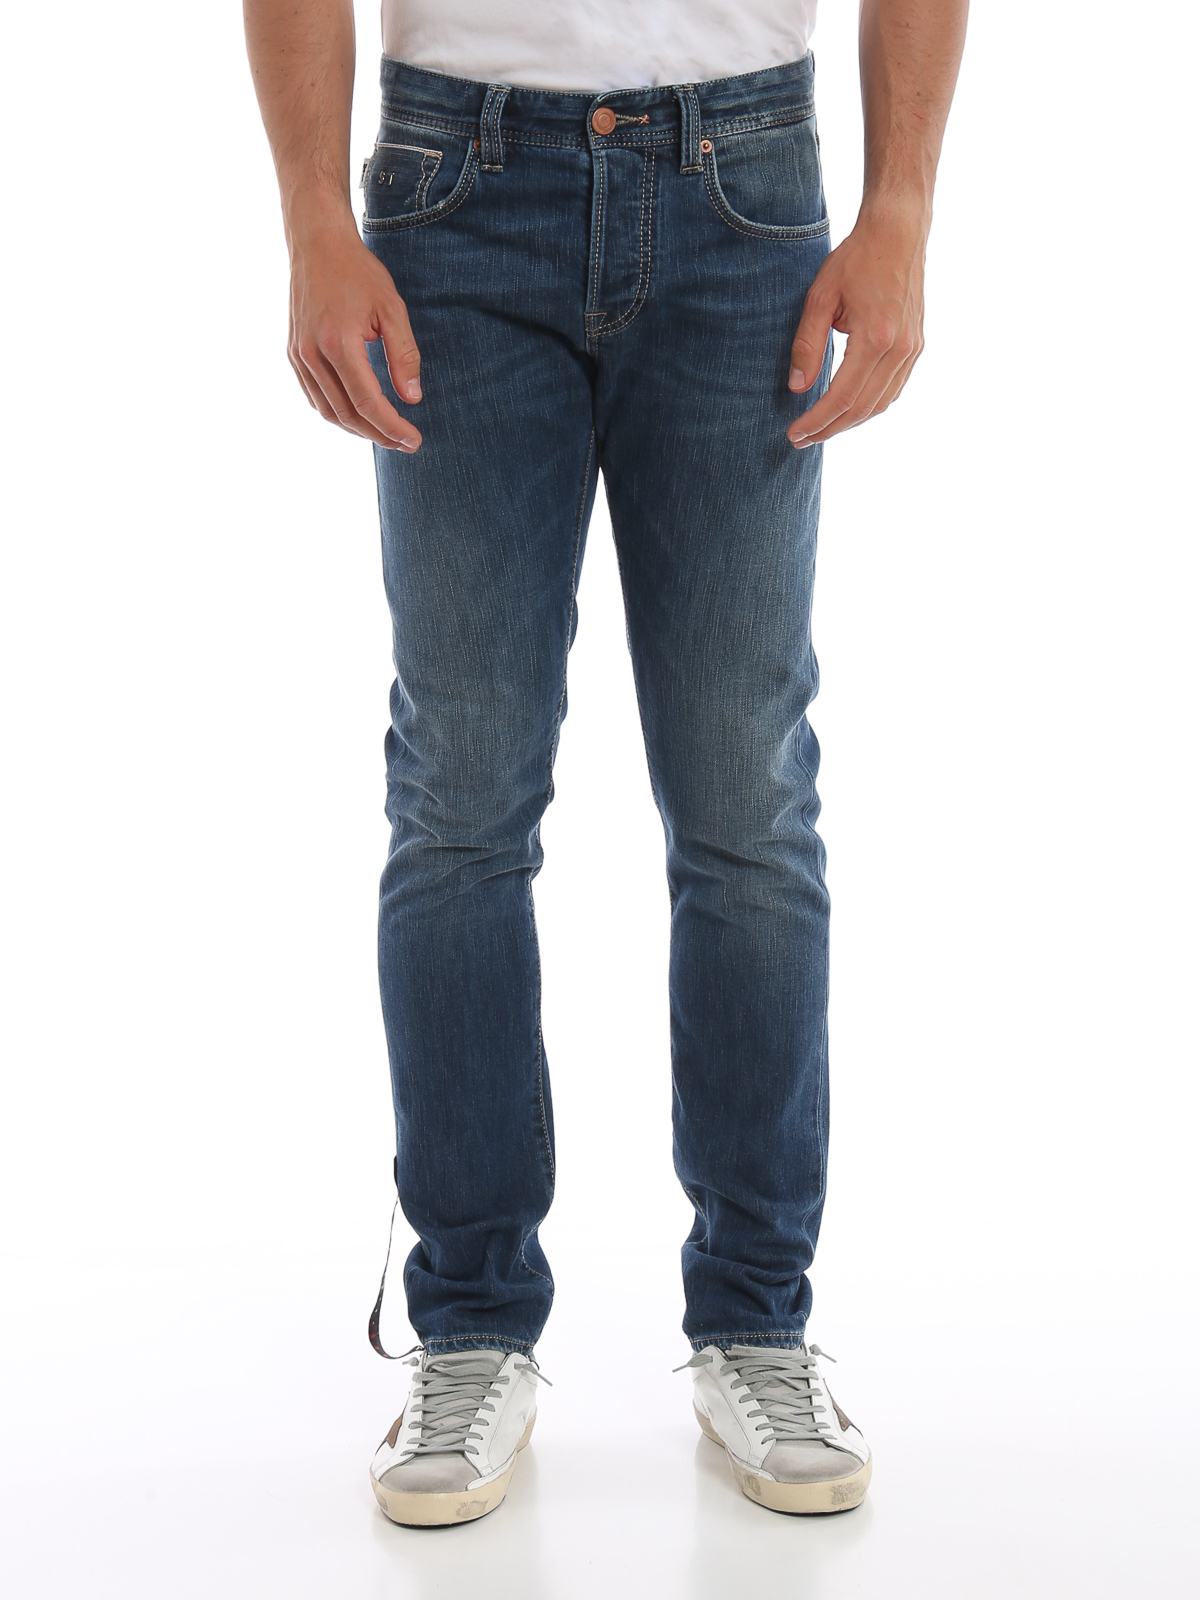 Straight leg jeans Tramarossa - Cimosa high quality tailored jeans ...